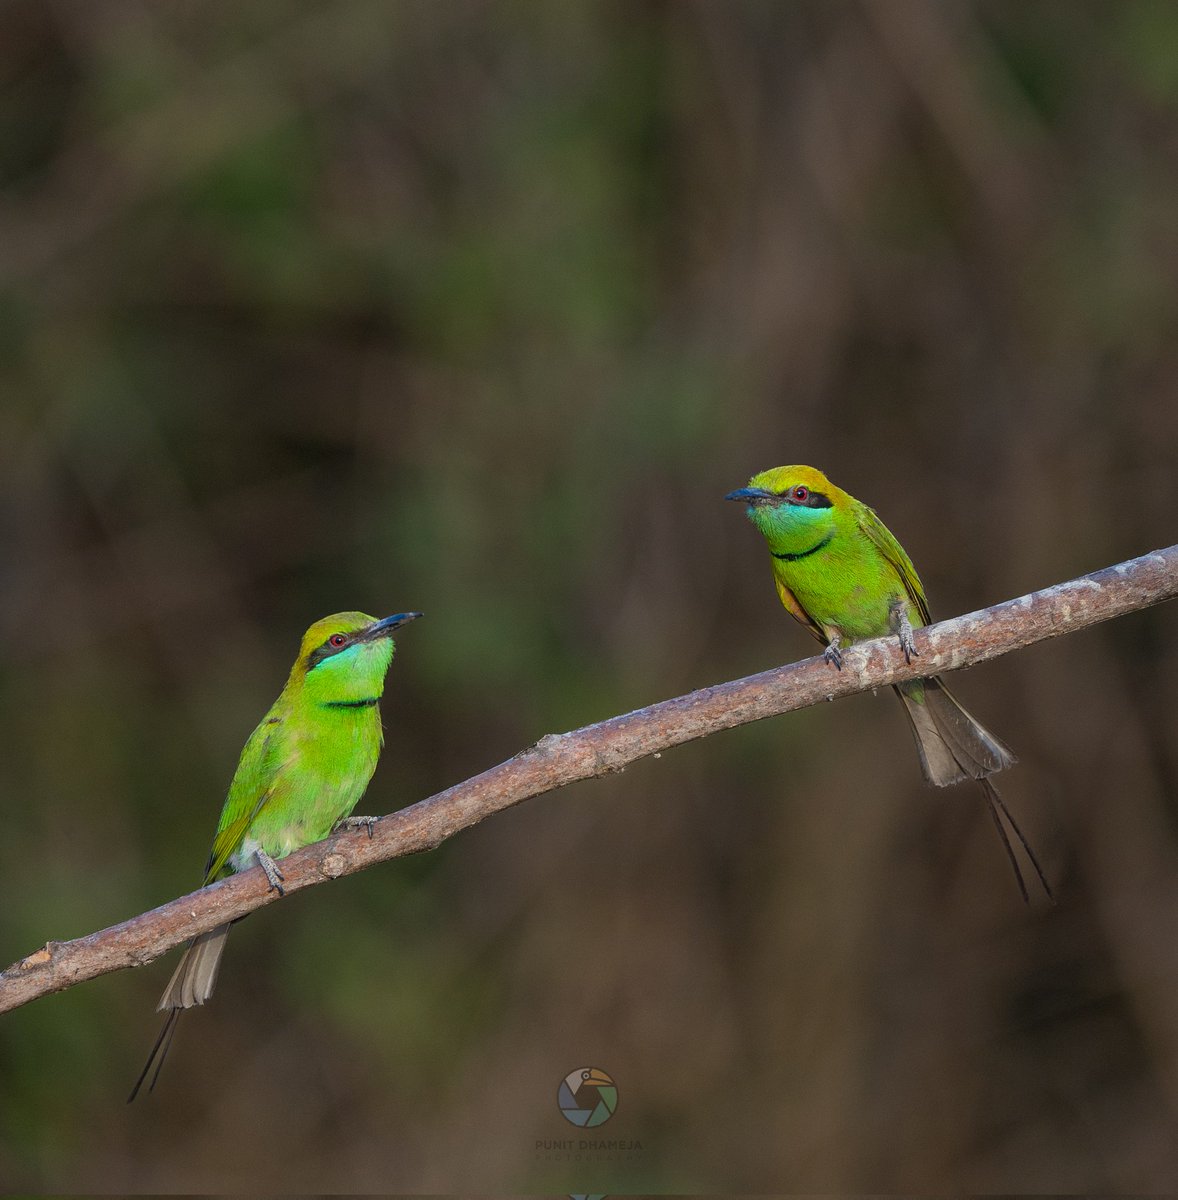 Burning Bright, Green Bee Eaters in mating ritual. #IndiAves #natgeoindia #birdwatching #birdphotography #wildlifephotography #NaturePhotograhpy